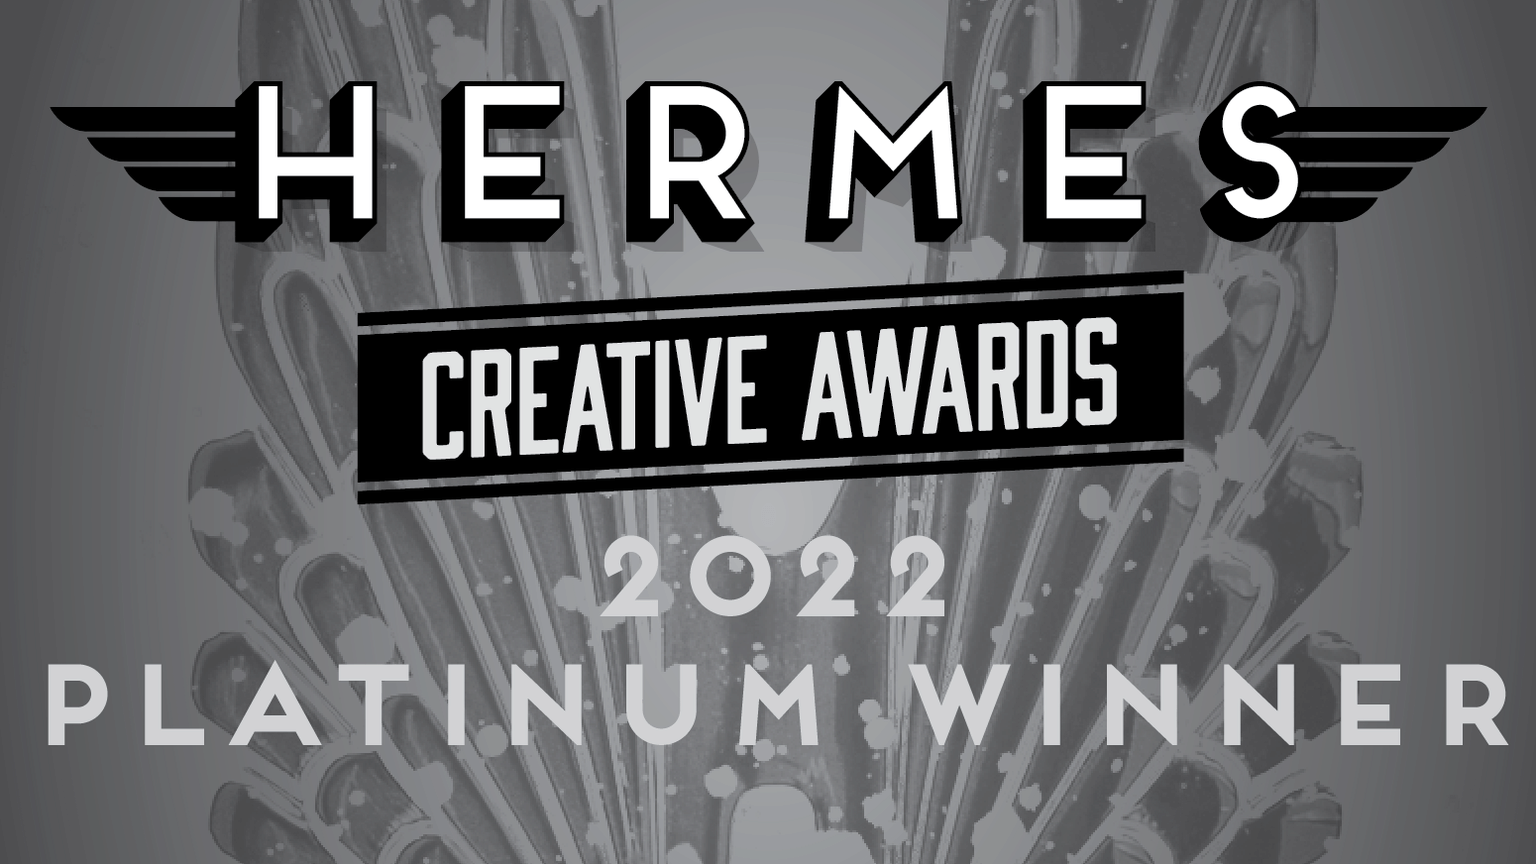 Hermes Creative Award Image